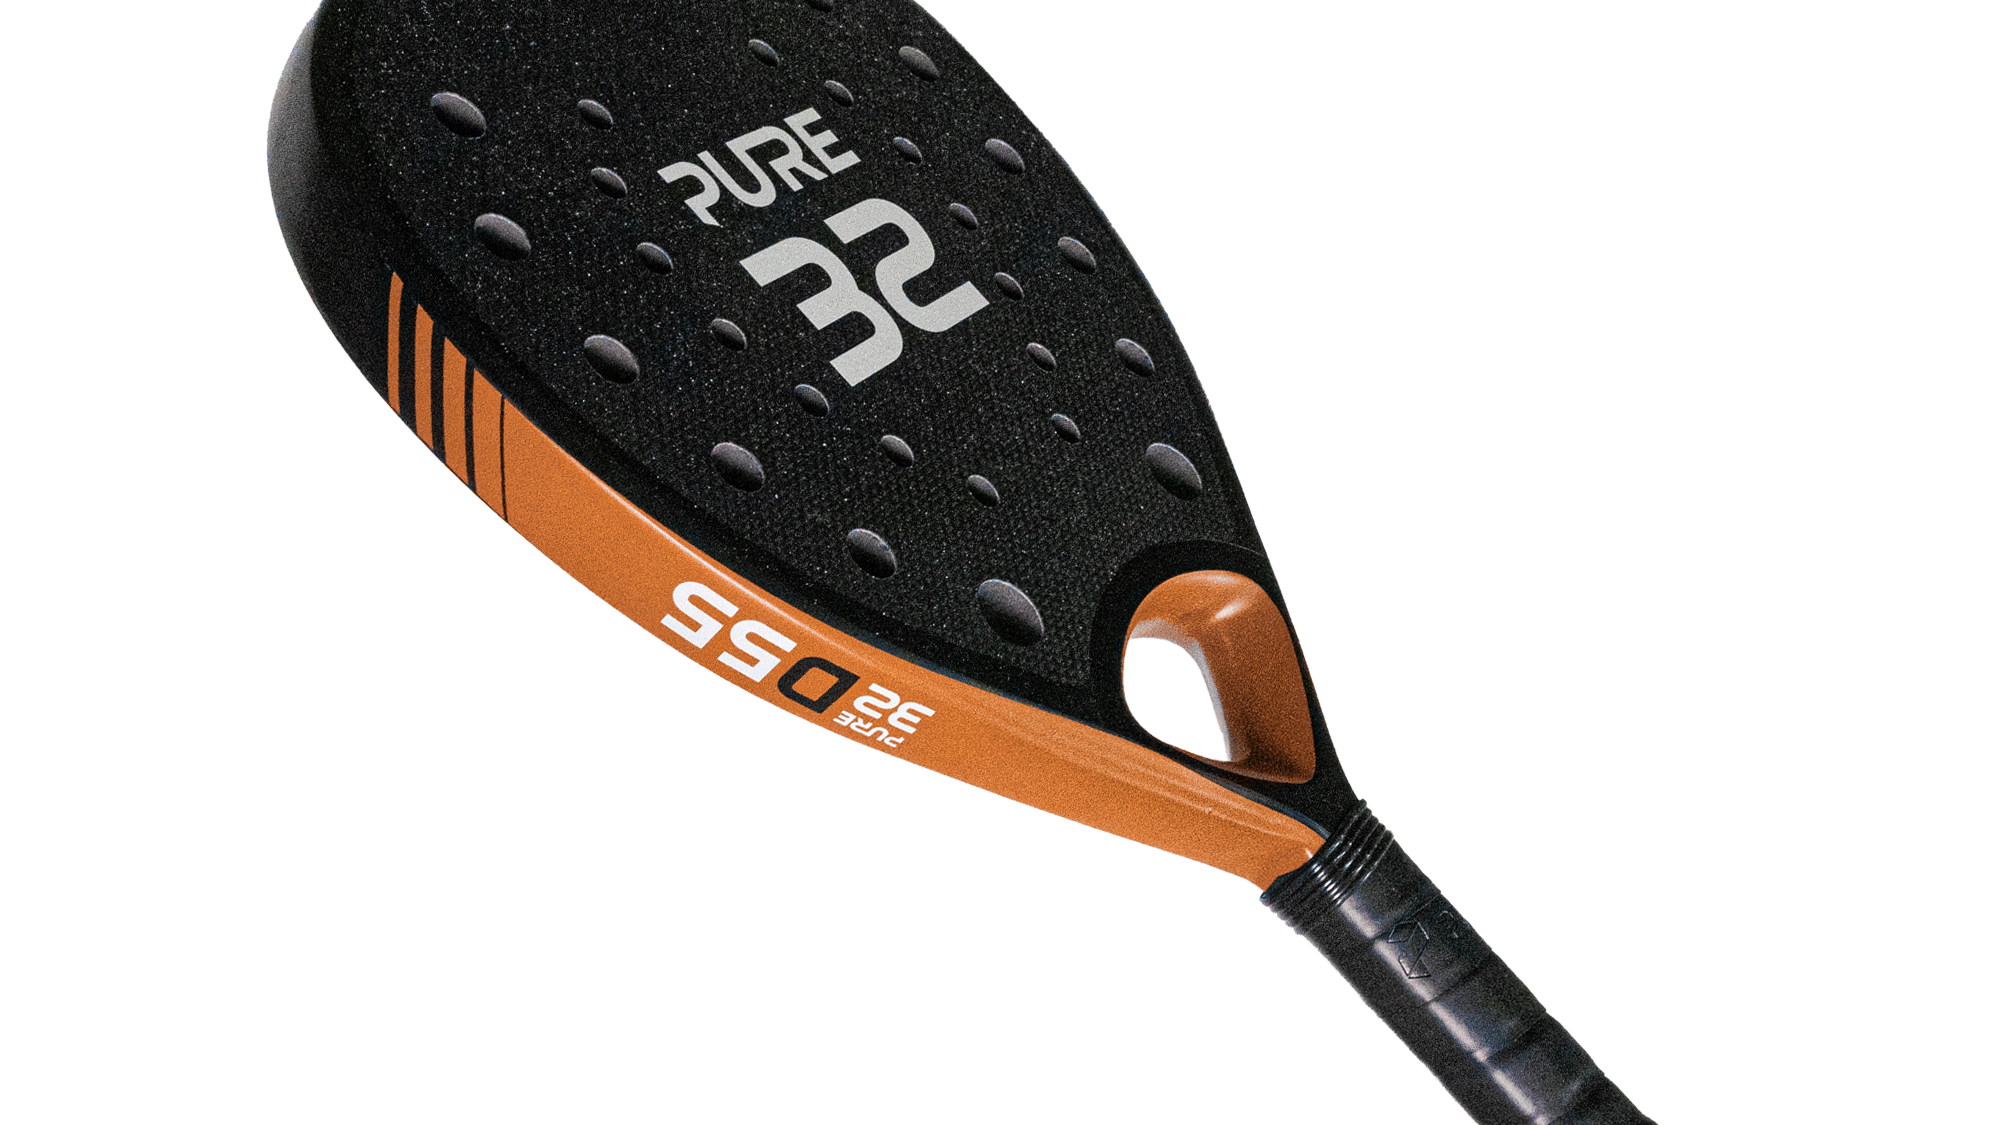 Pure32 padel racket | D55 padel racket